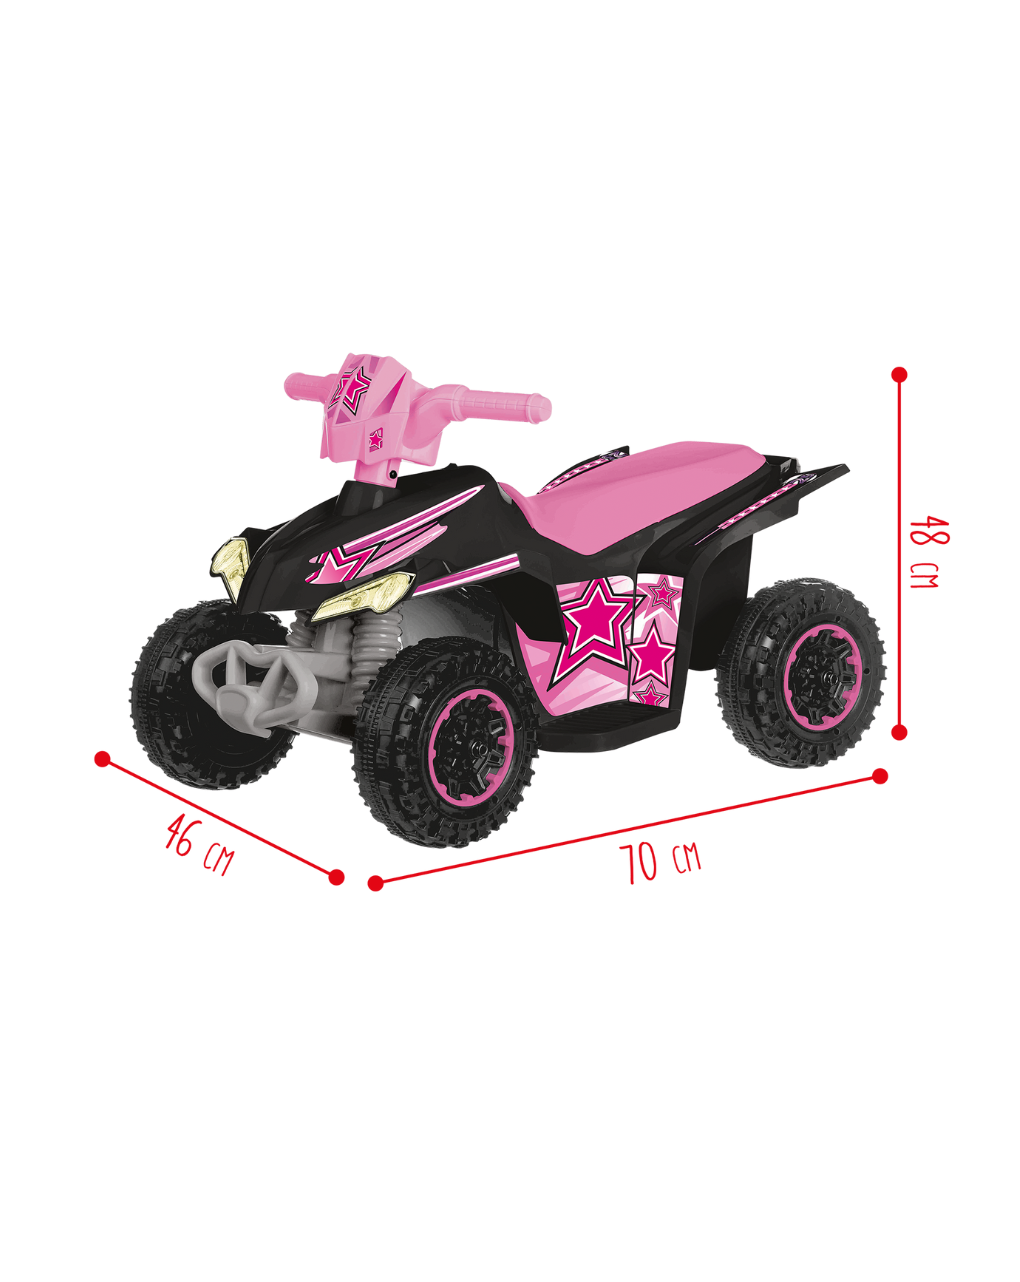 Sun & sport – ηλεκτροκίνητη quad γουρούνα 6v ροζ rdf52142 - Sun&Sport